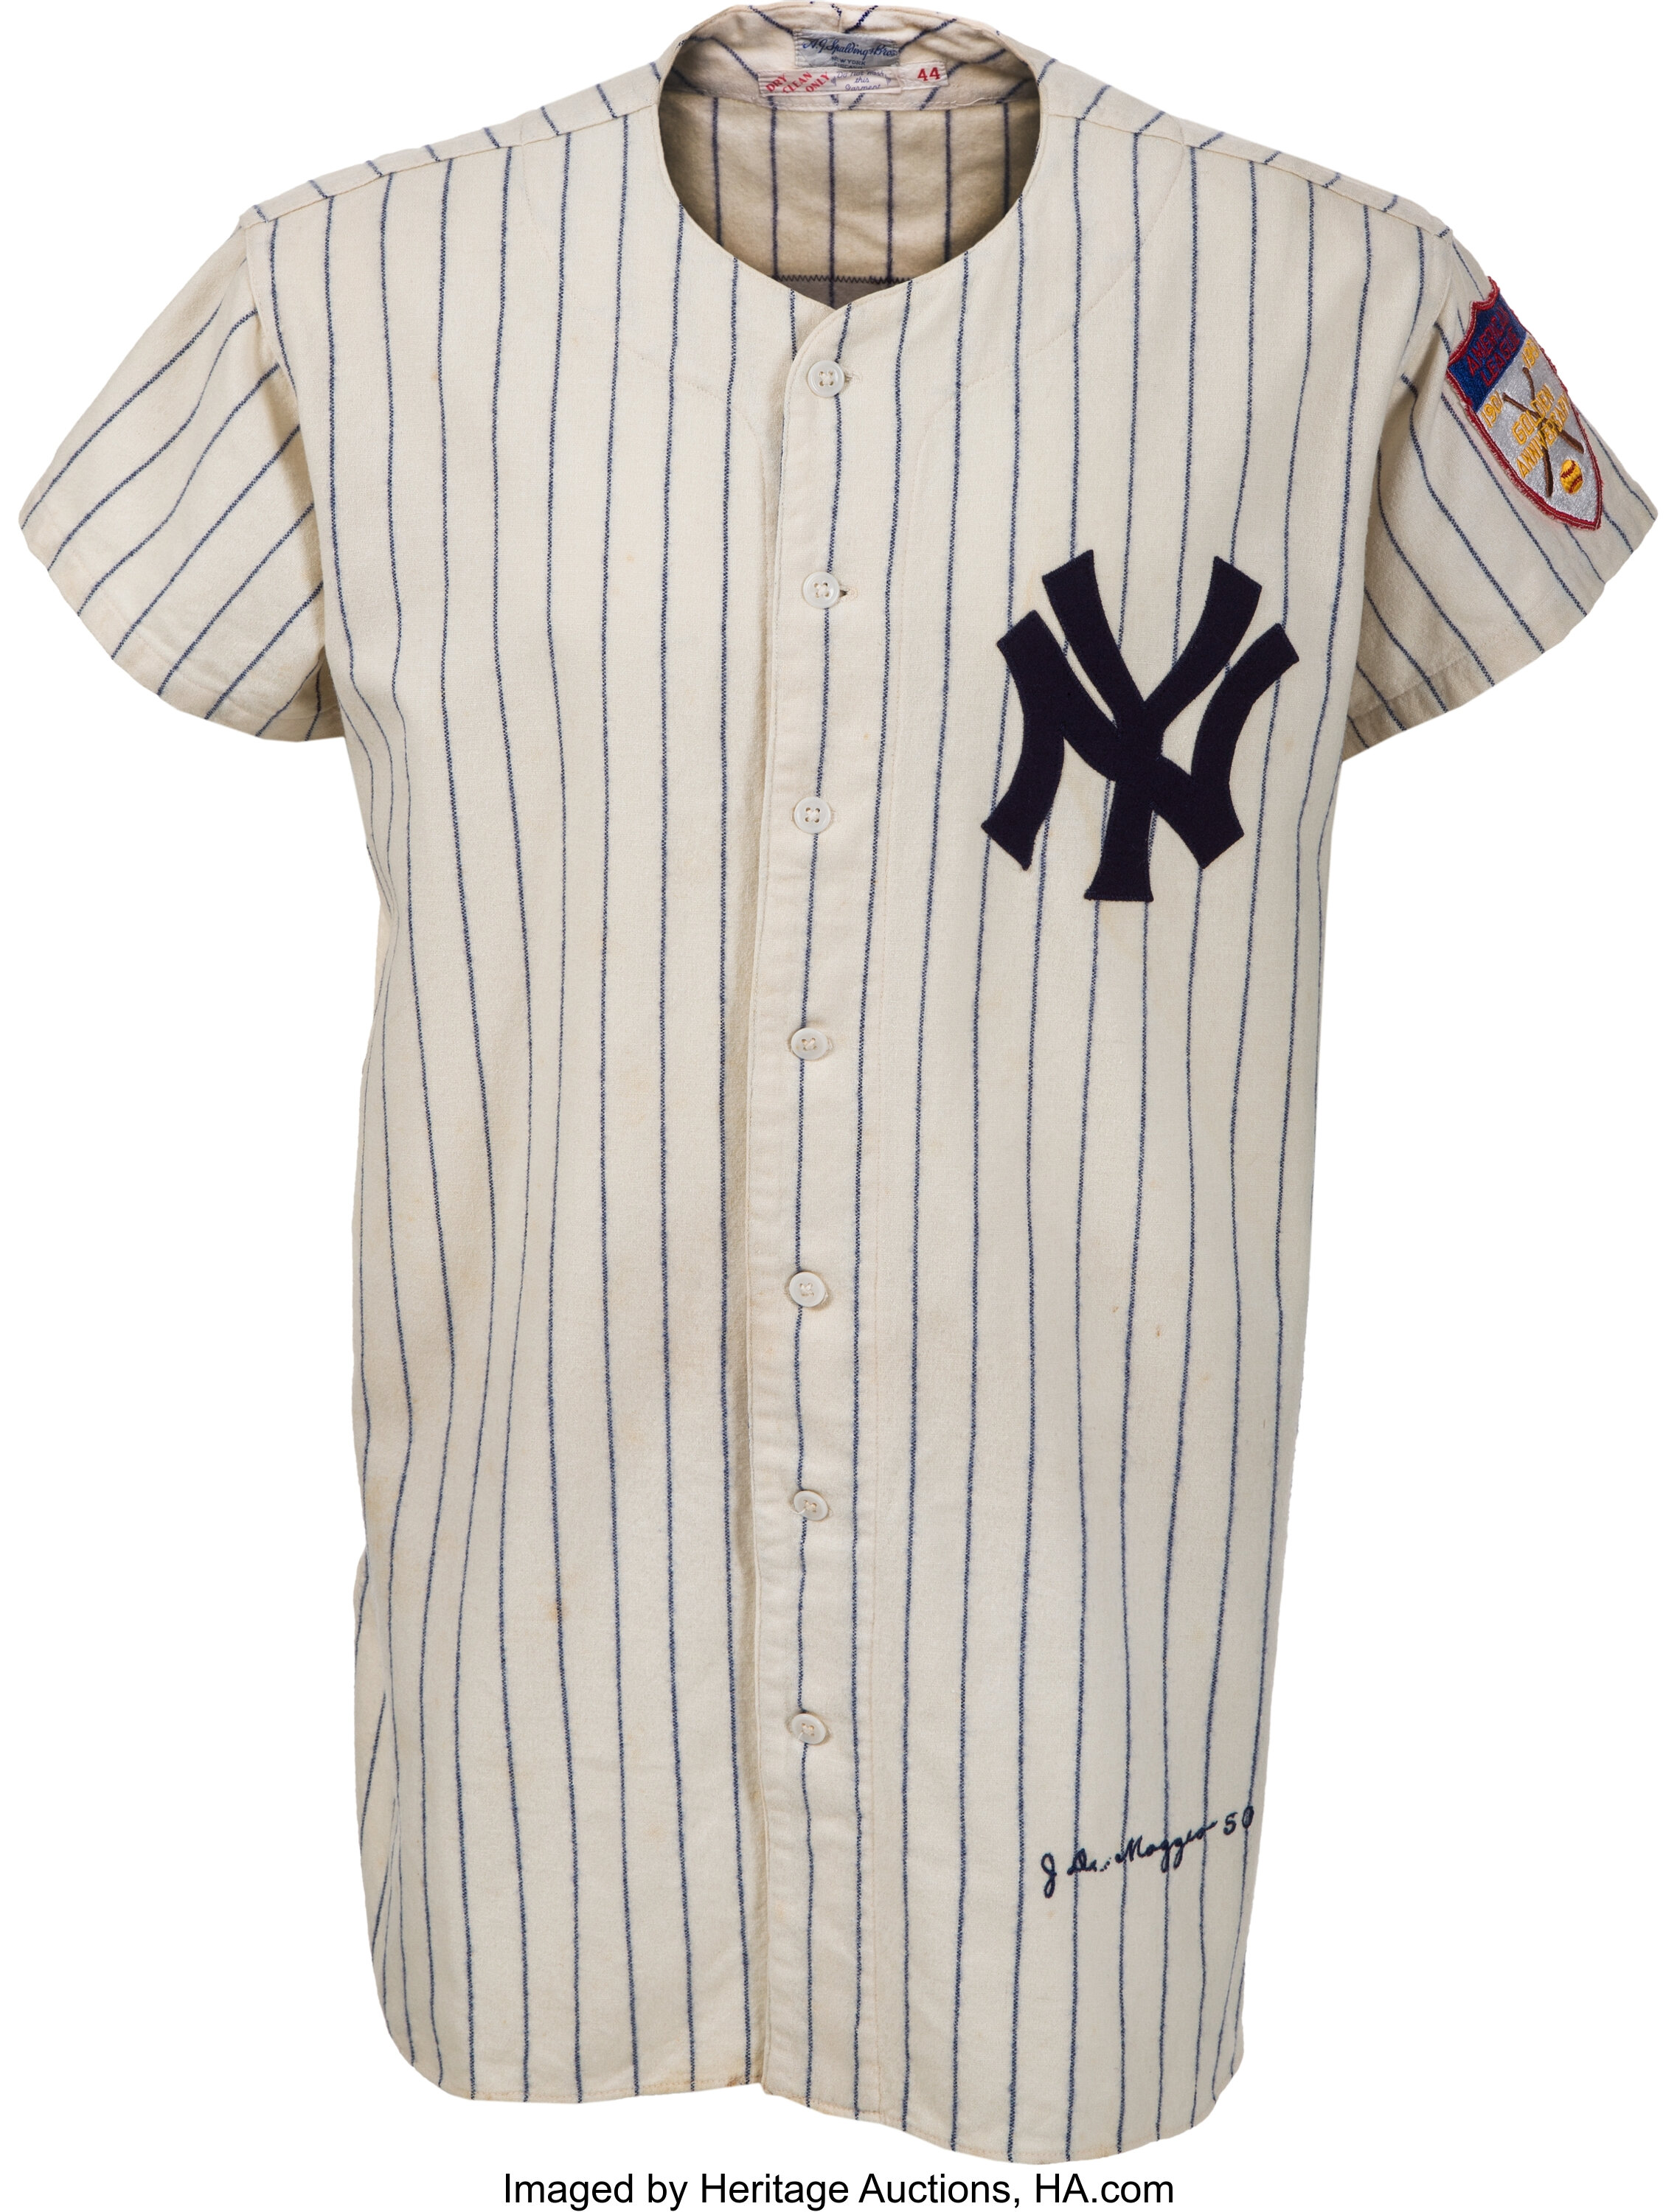 The Evolution of the New York Yankees Uniform - Baseball